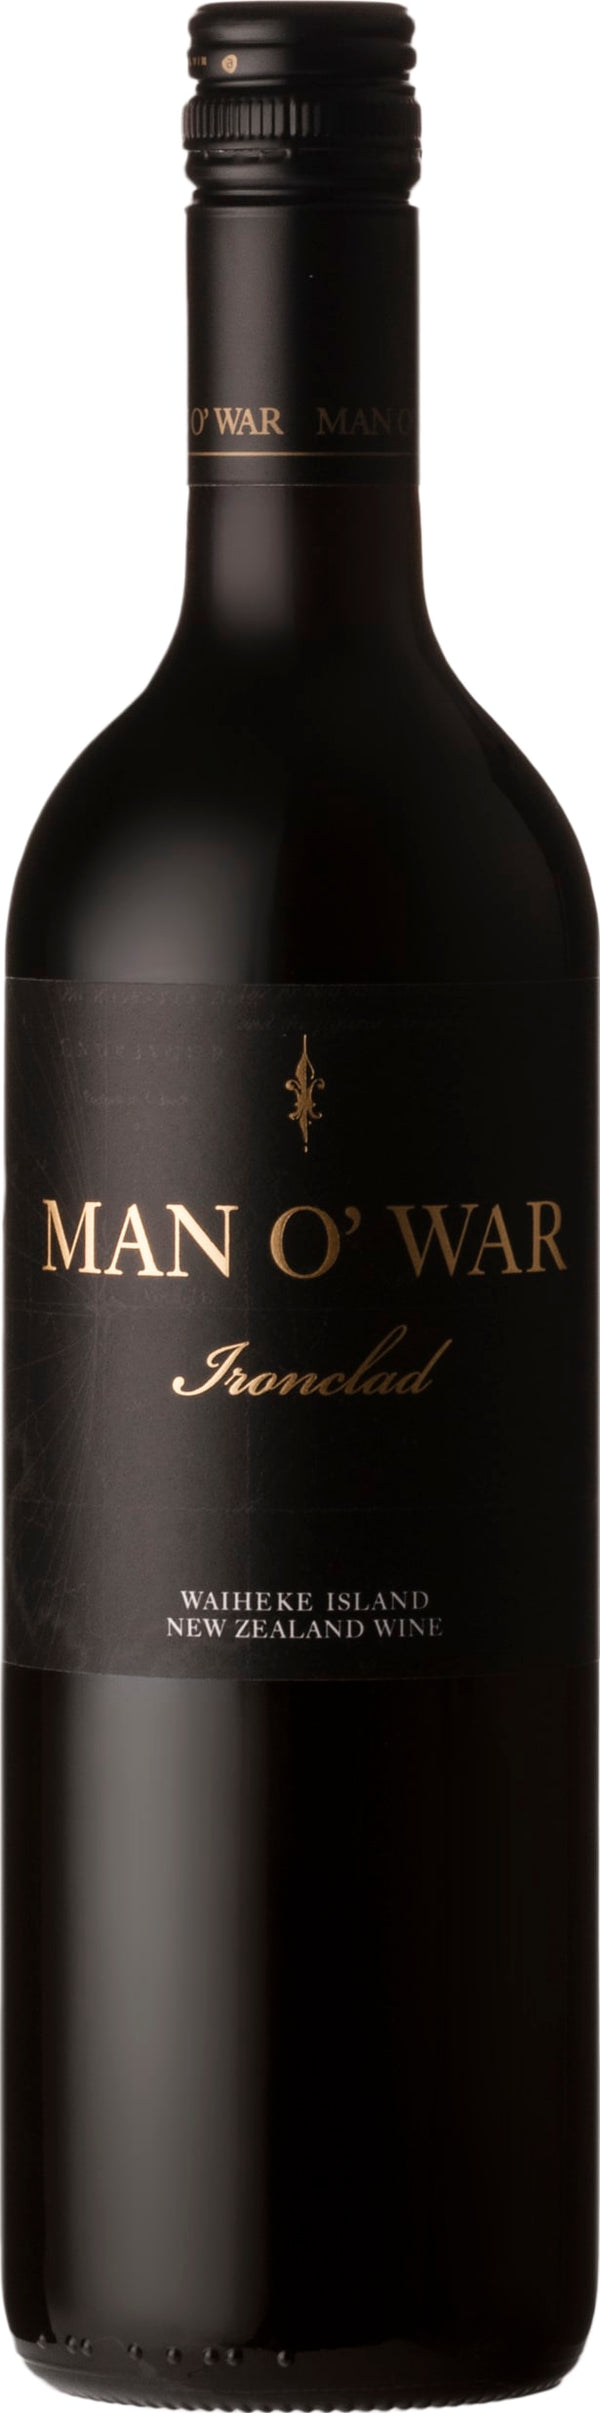 Man O War Ironclad Merlot Cabernet Franc 2019 6x75cl - Just Wines 